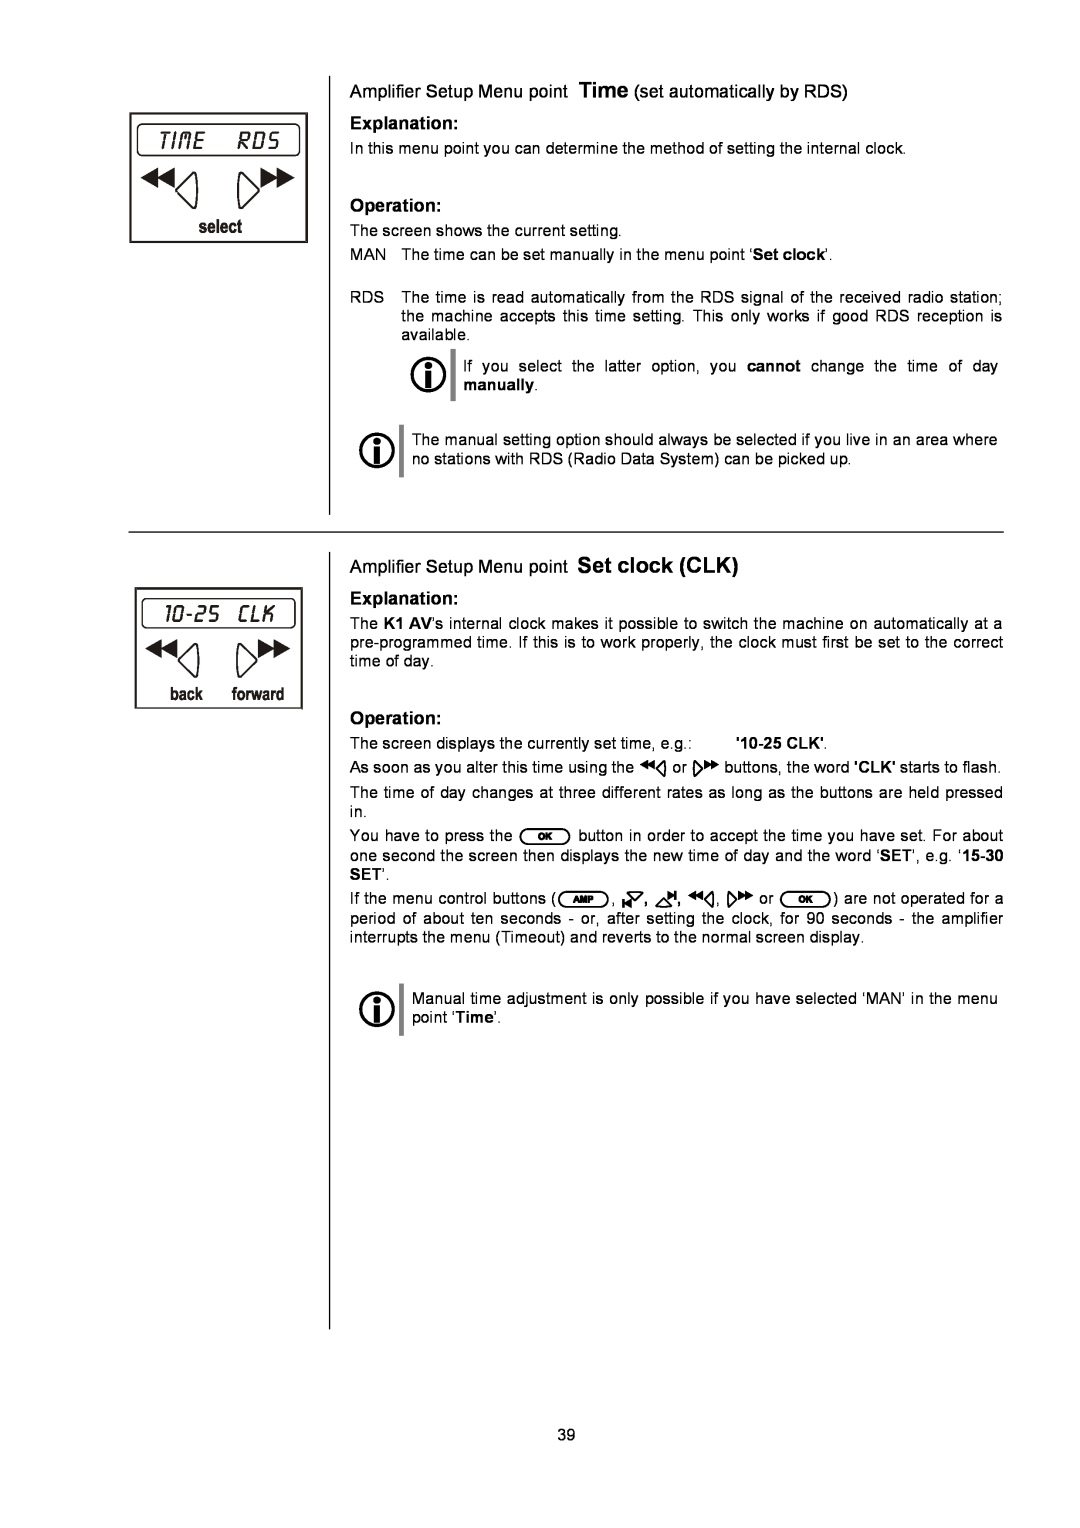 T+A Elektroakustik K1 AV user manual Time Rds, Amplifier Setup Menu point Set clock CLK, Explanation, Operation 